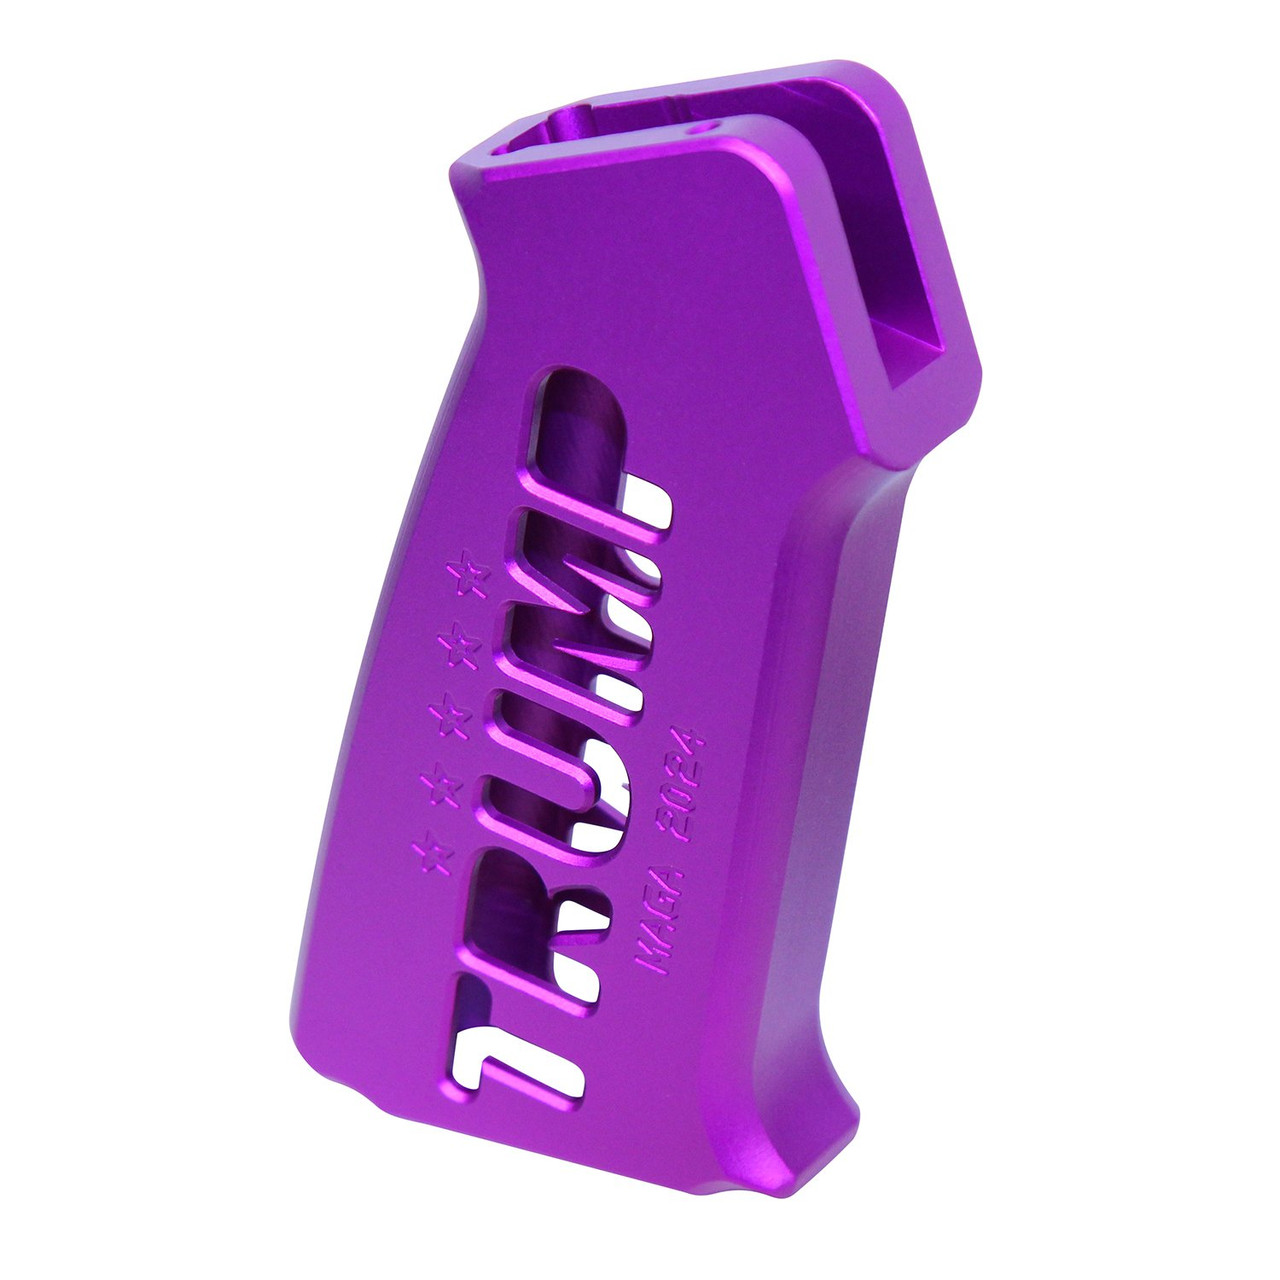 Guntec USA TRUMP-PG-G2-PURPLE AR-15 "Trump Series" Limited Edition Pistol Grip (Anodized Purple)